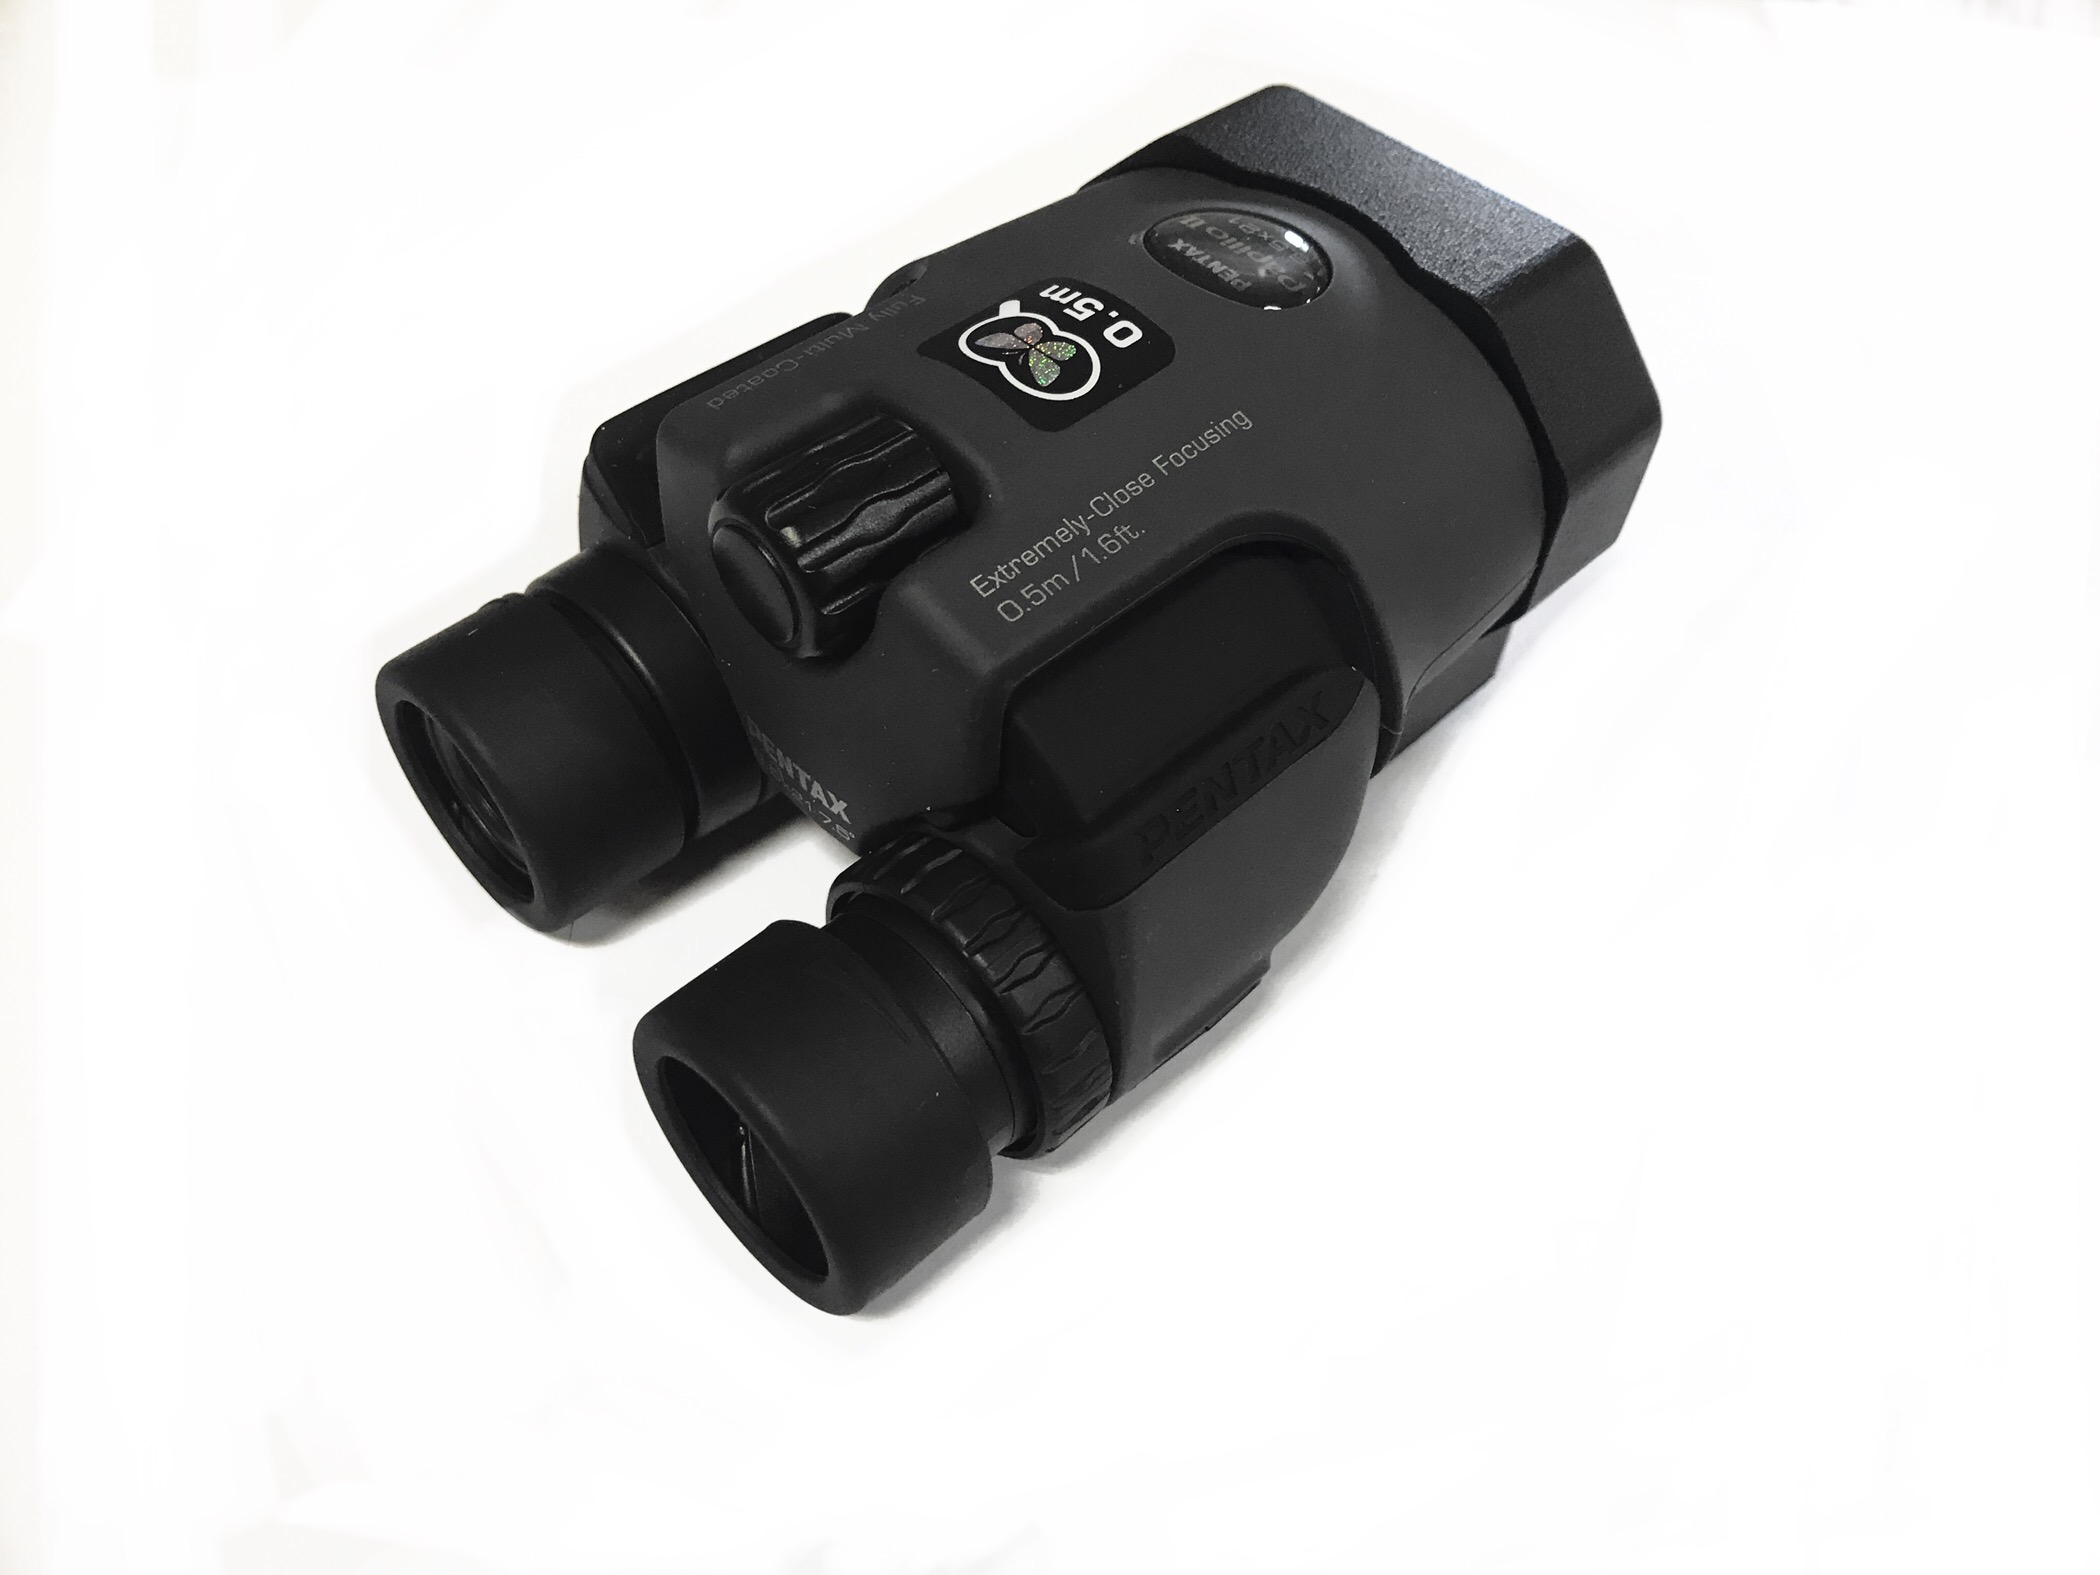 New product: hidden video cameras detector OPTIC-2